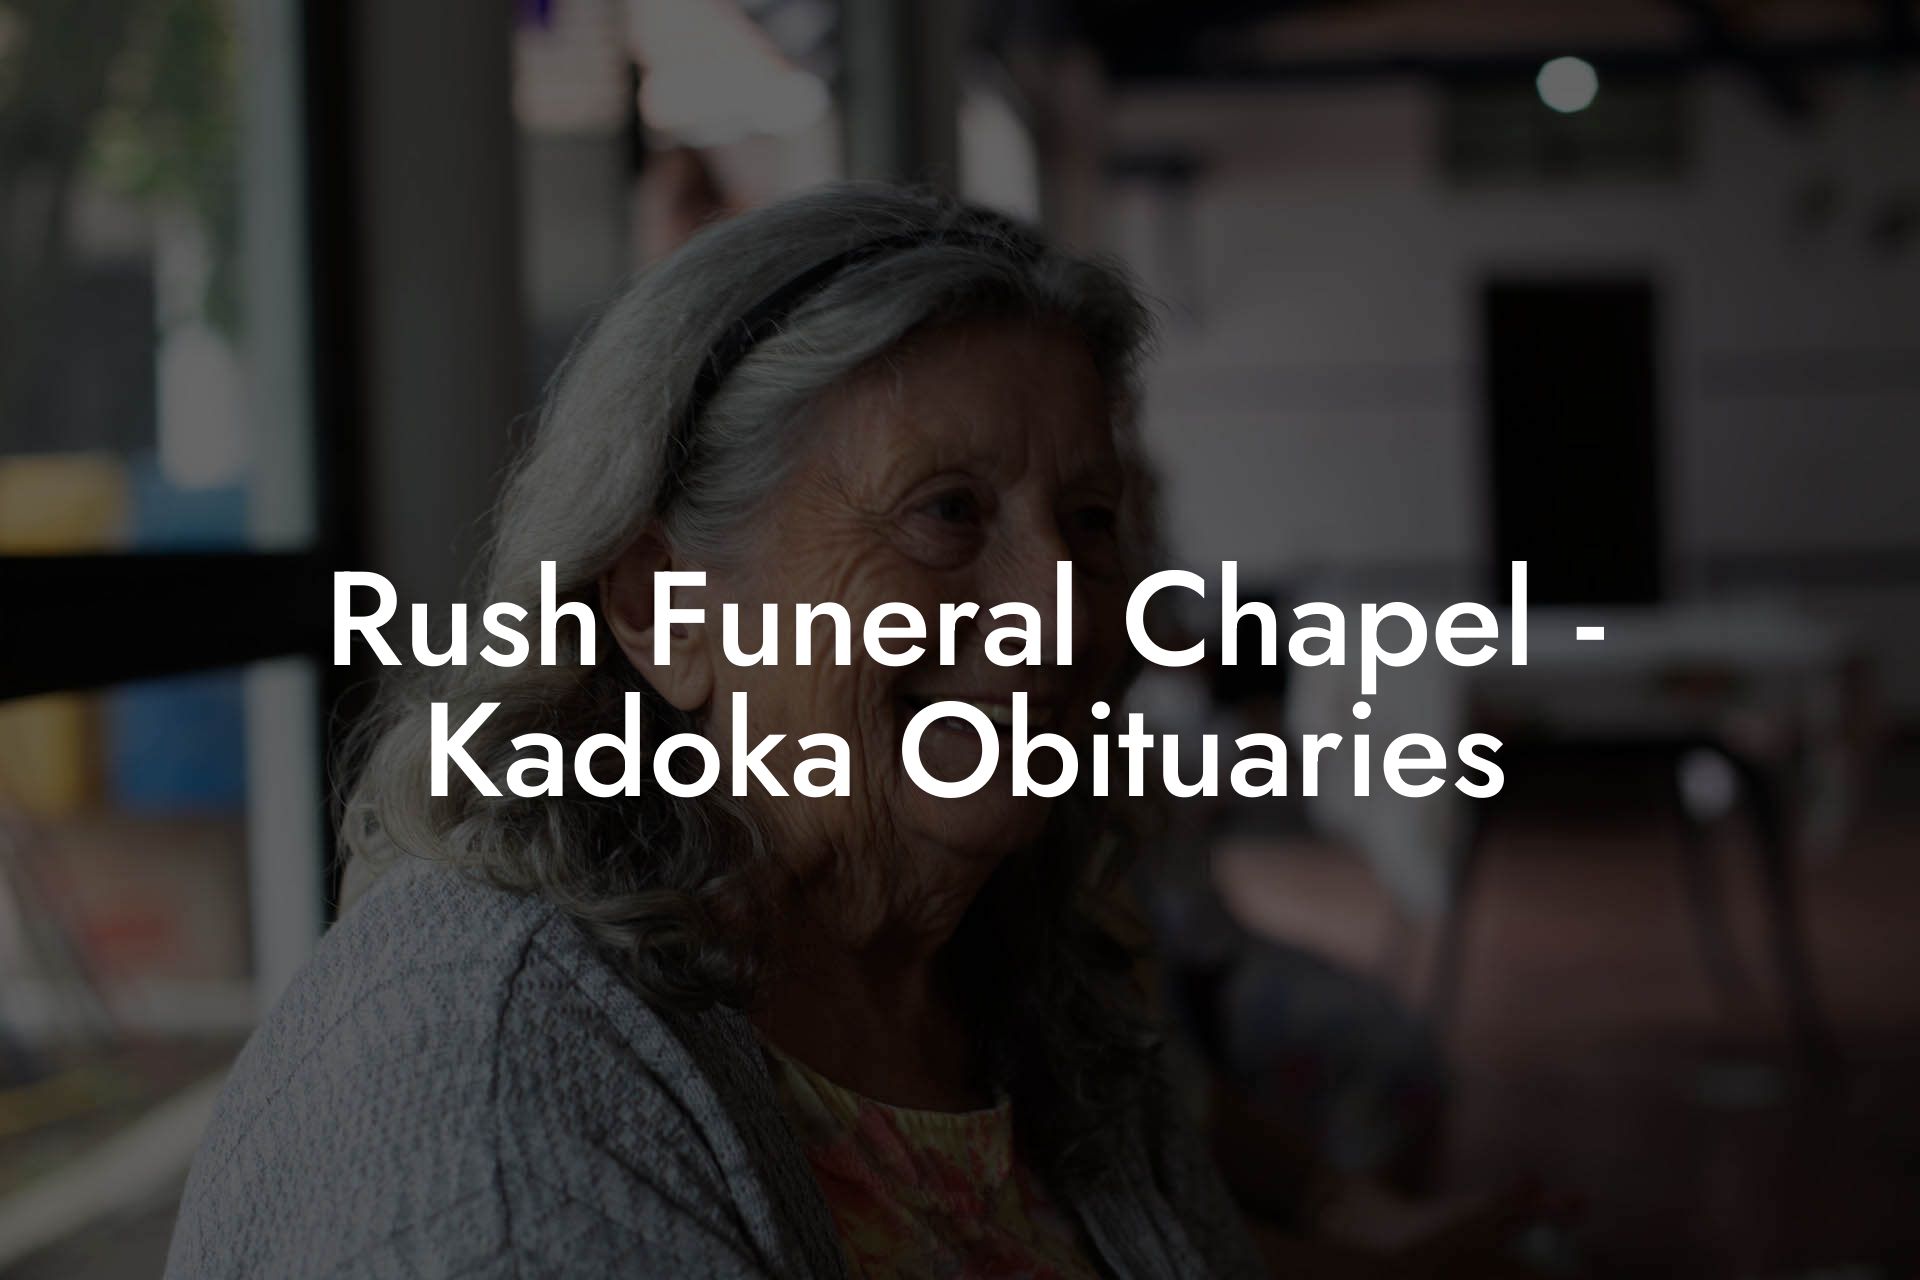 Rush Funeral Chapel - Kadoka Obituaries